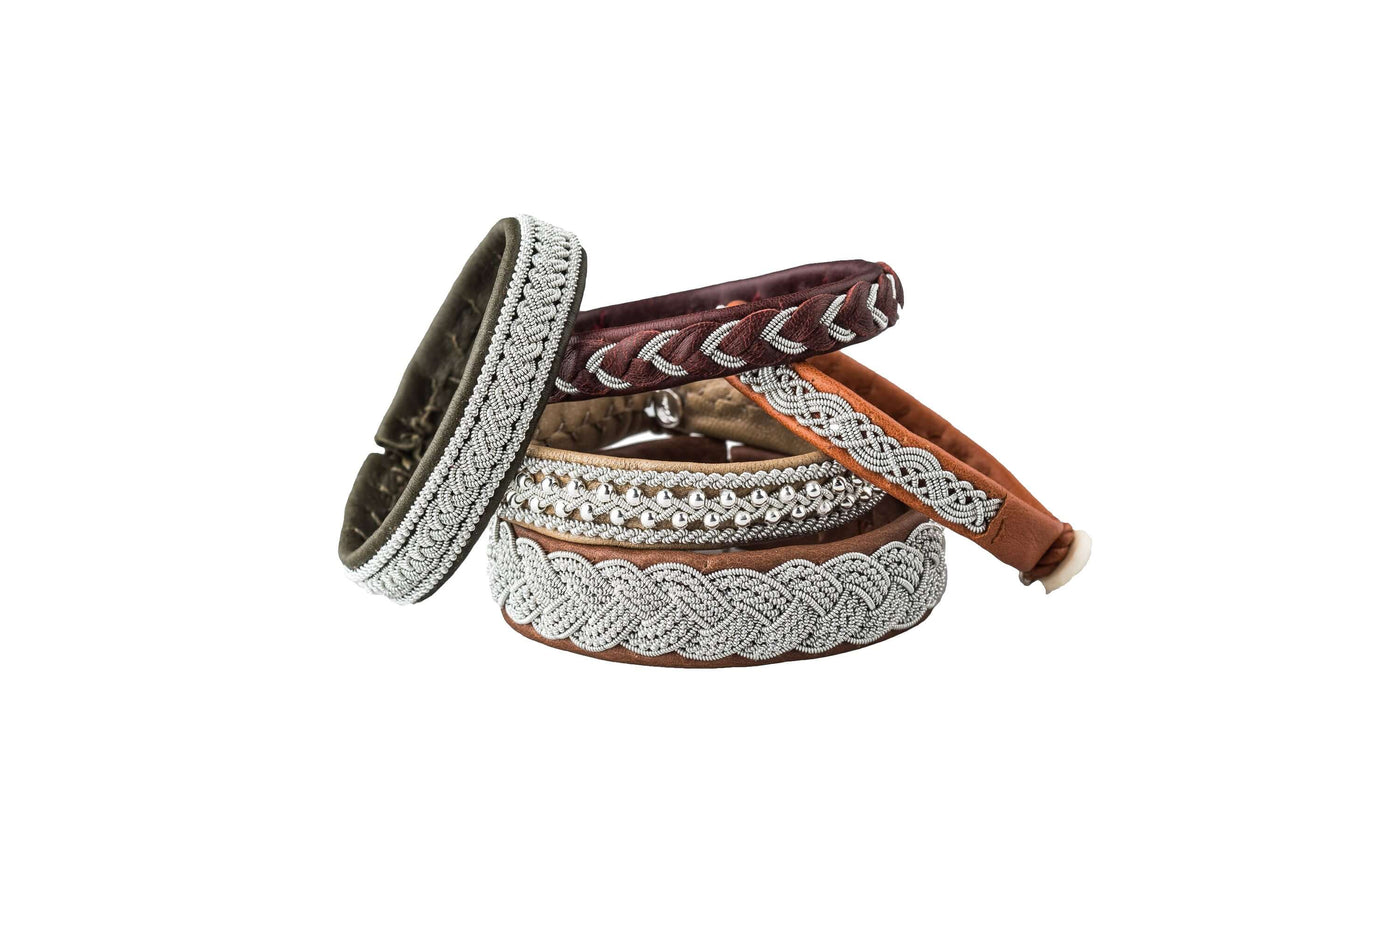 MARIA RUDMAN leather bracelet unisex - ブレスレット